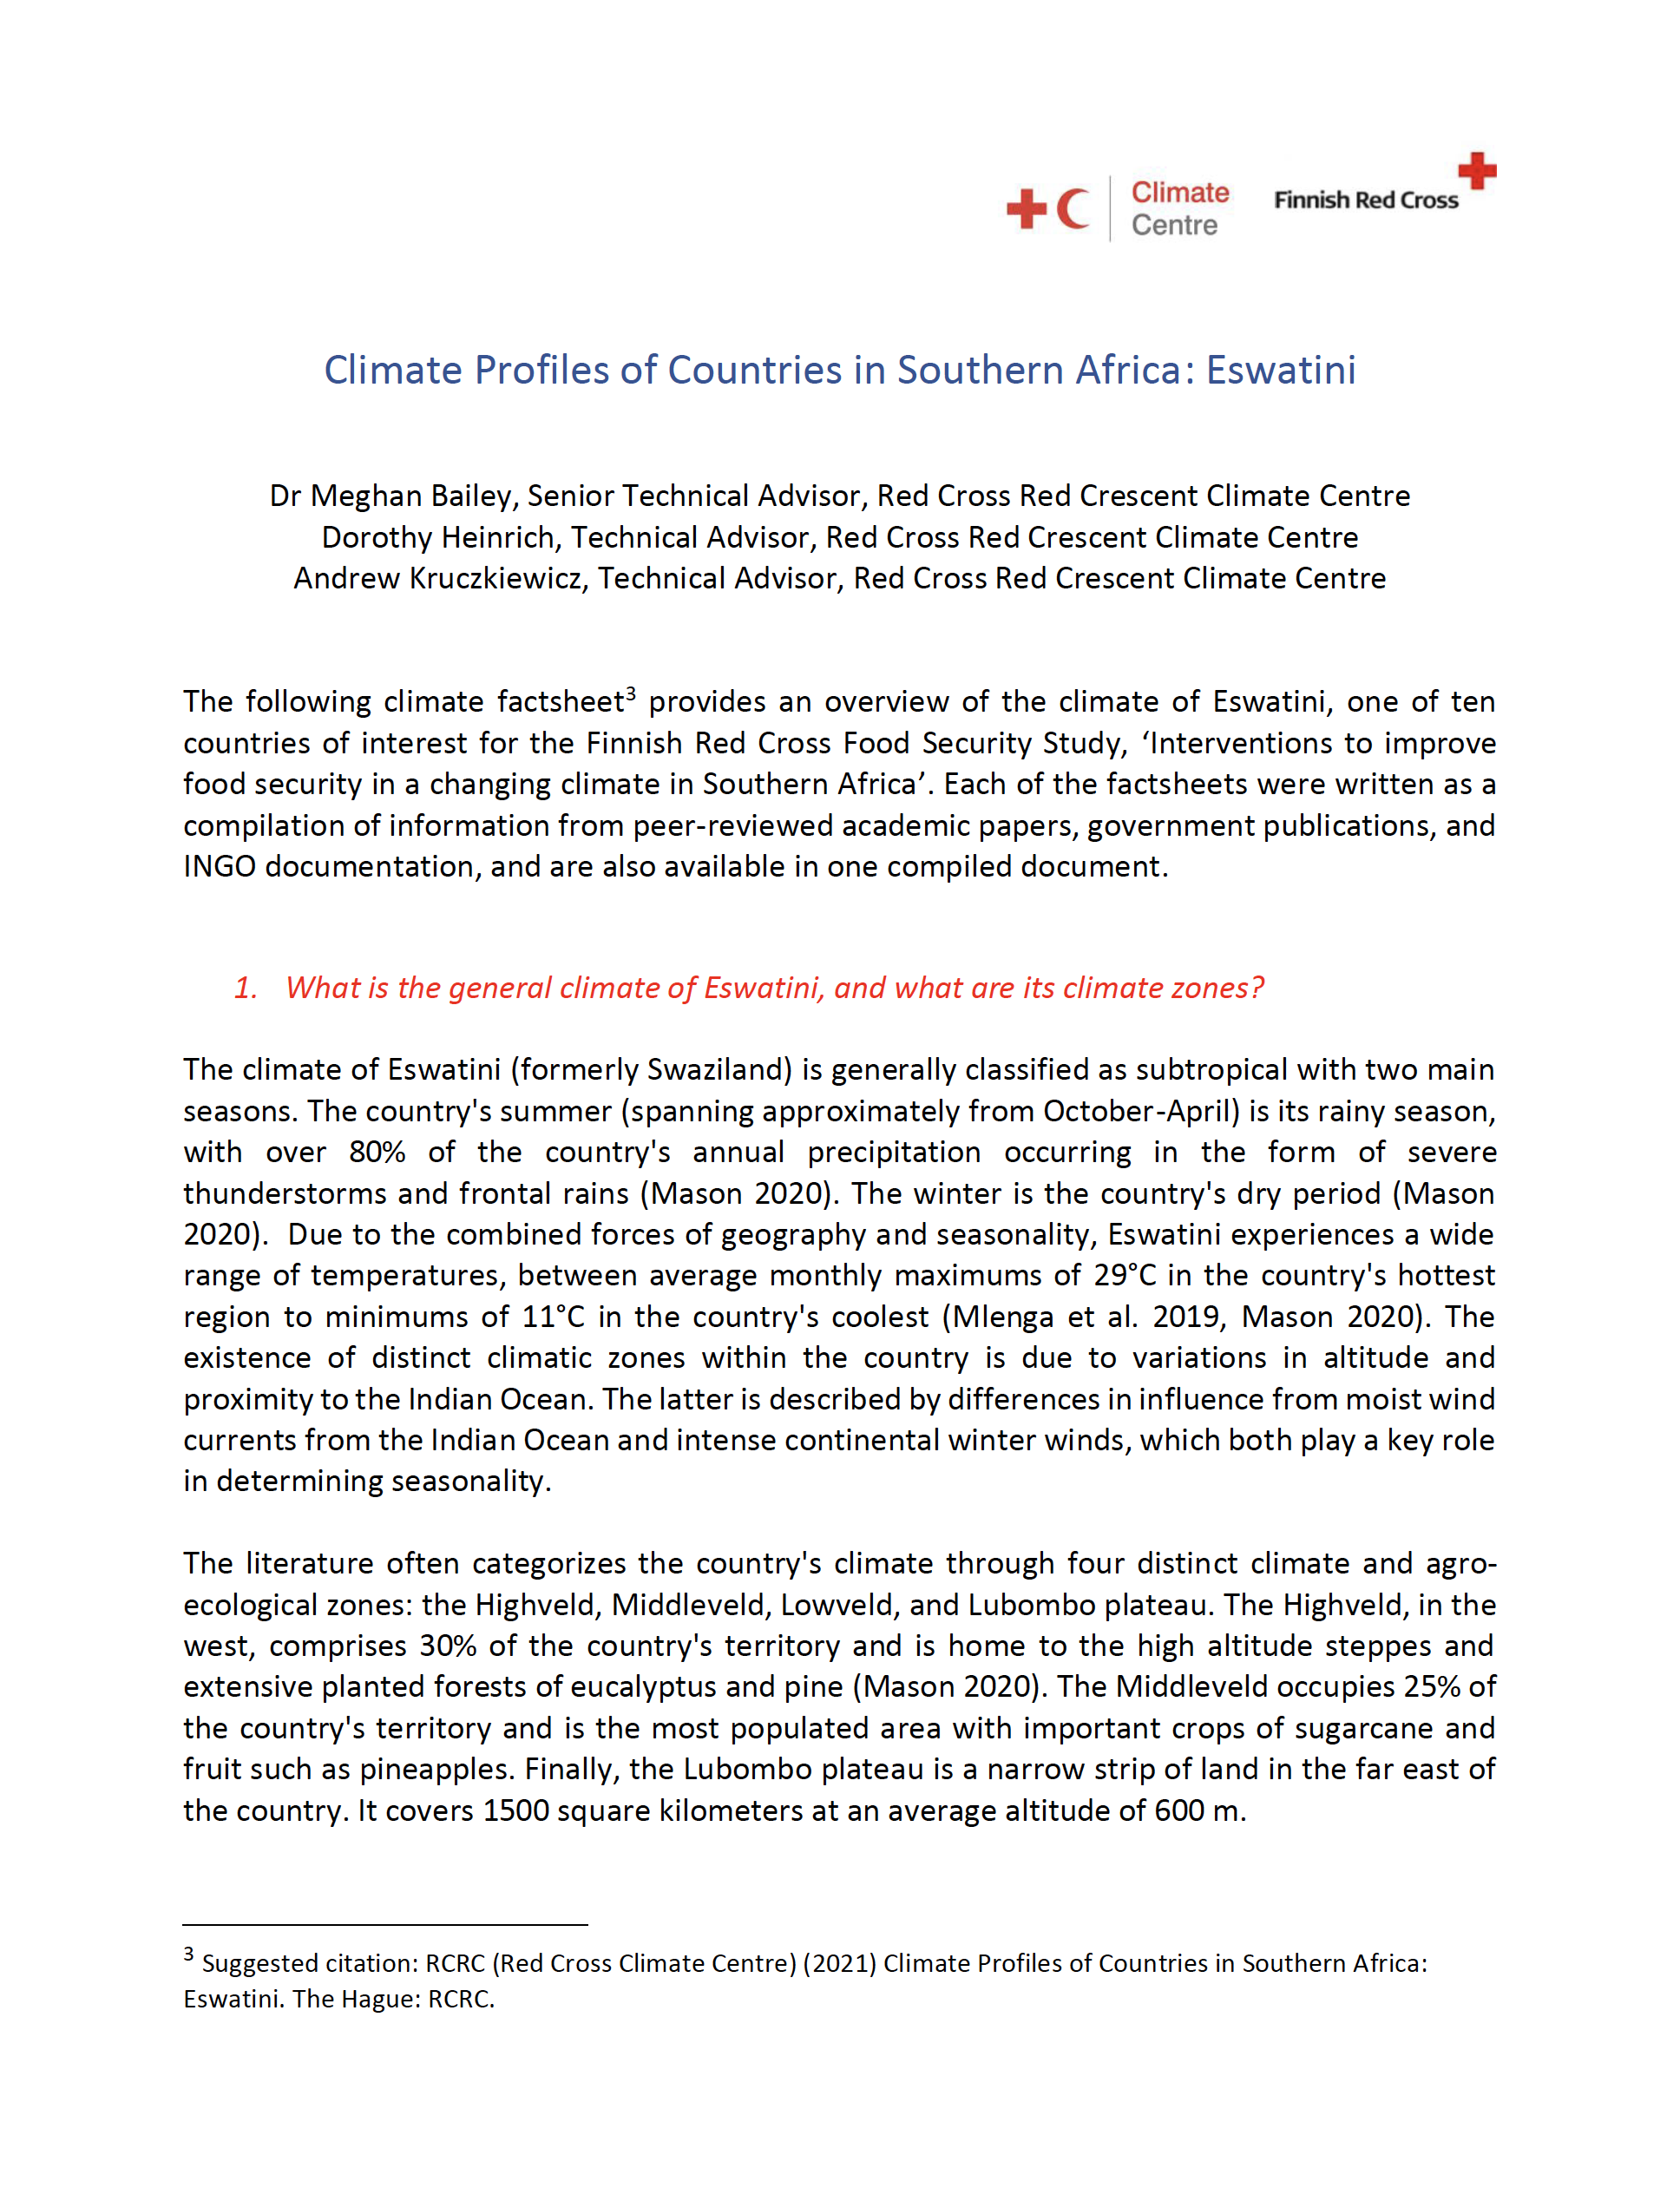 Climate Factsheet Eswatini